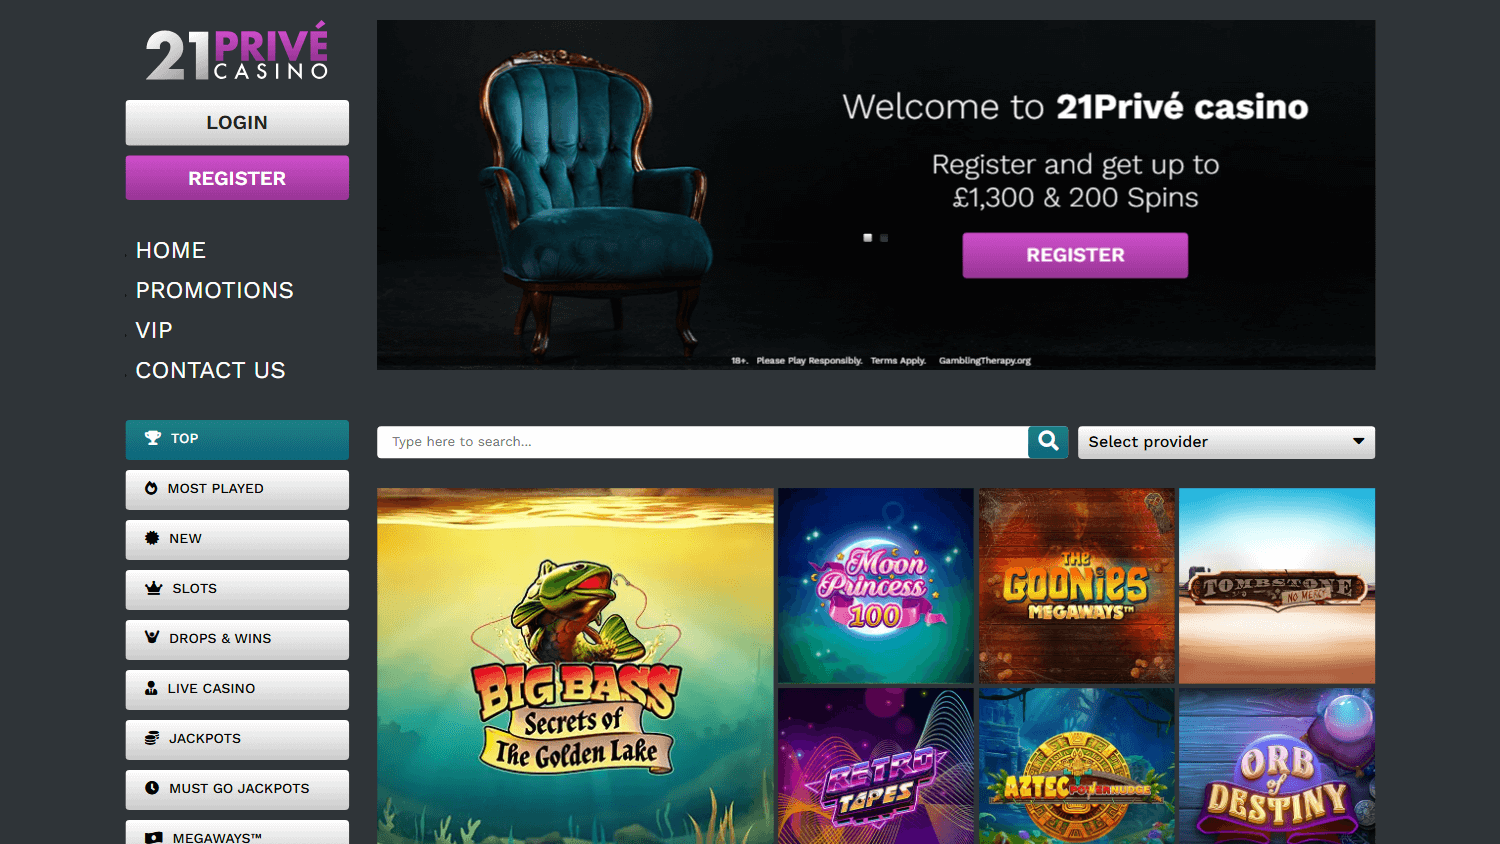 21_prive_casino_homepage_desktop